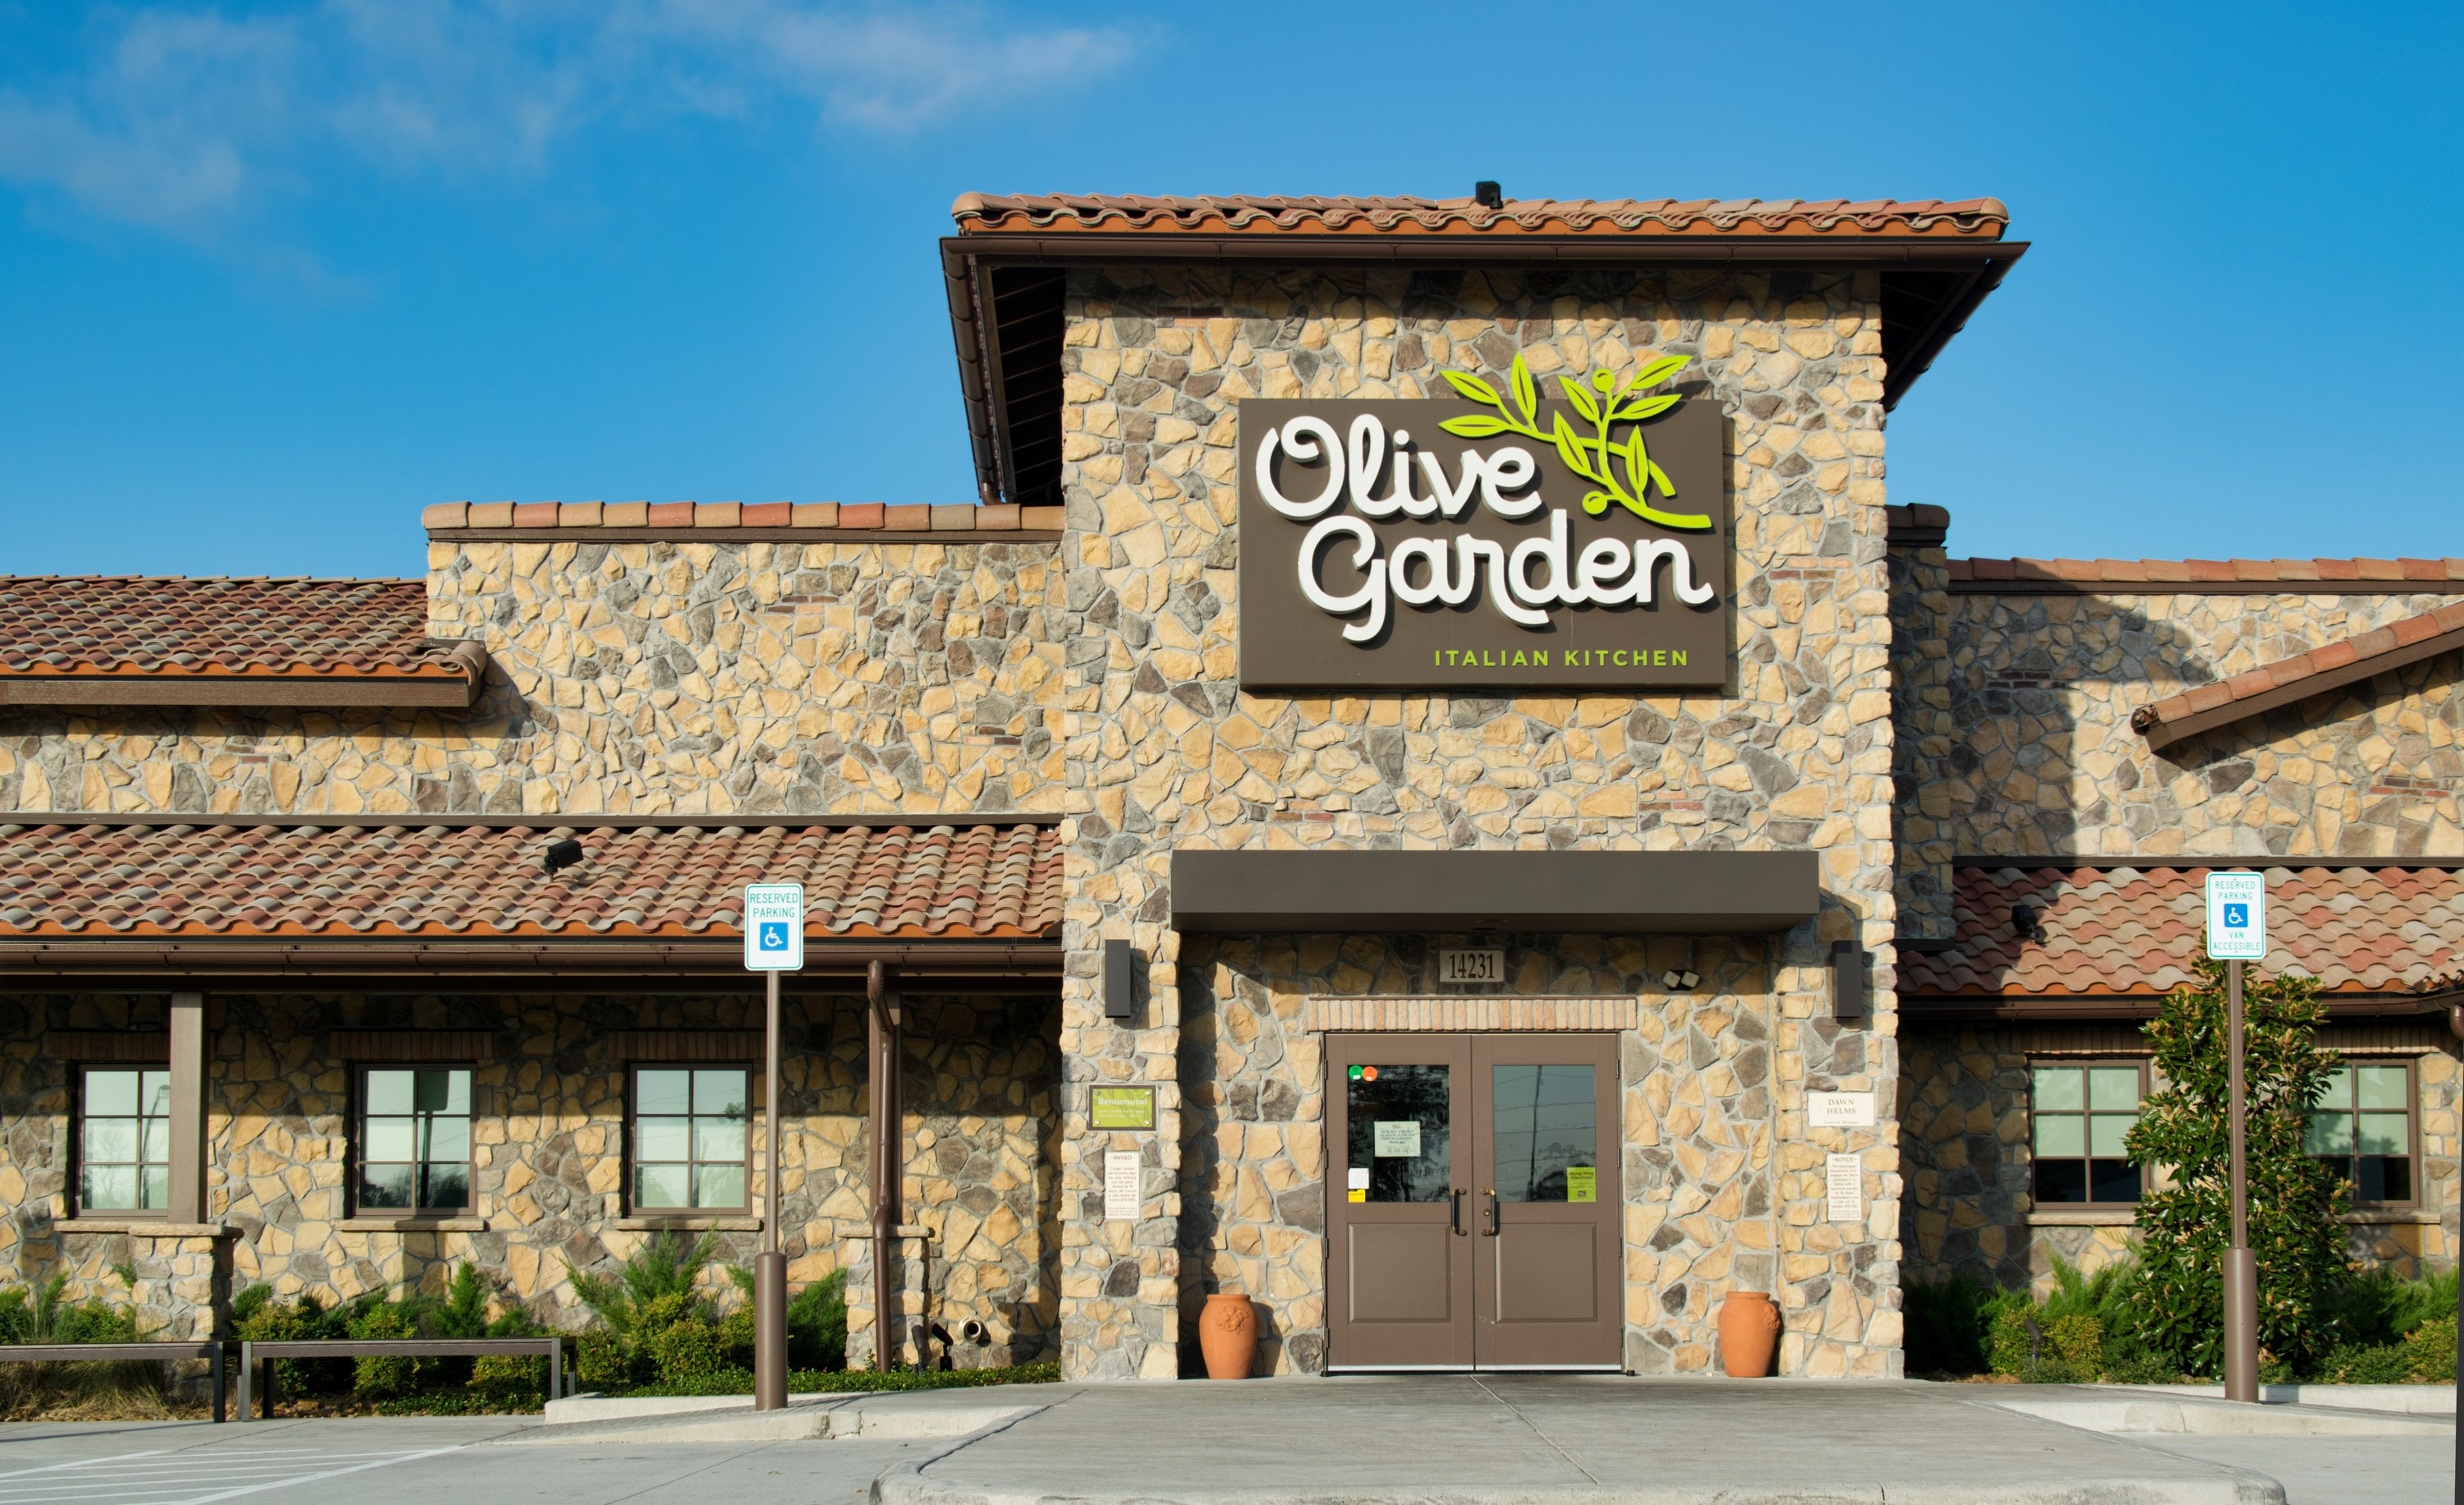 The exterior of an Olive Garden restaurant